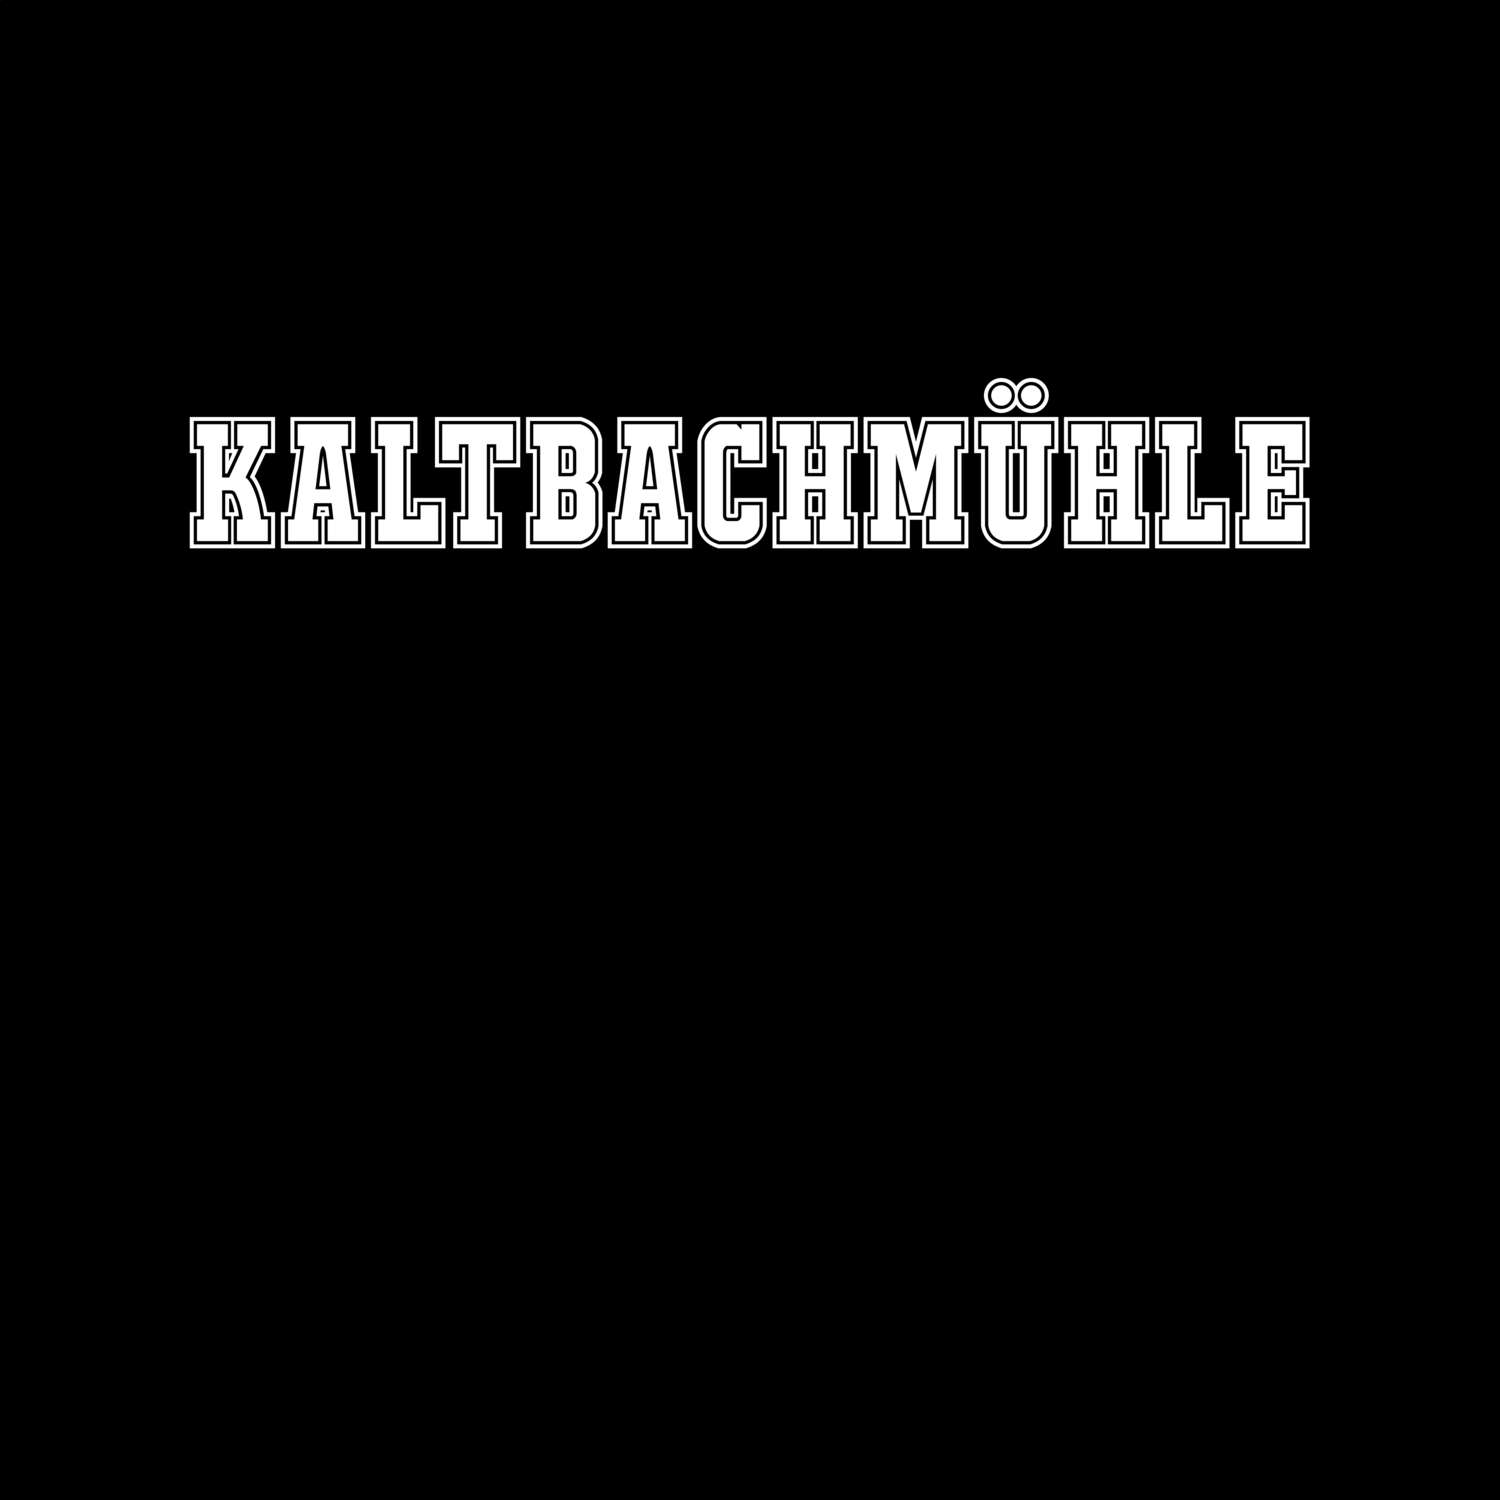 Kaltbachmühle T-Shirt »Classic«